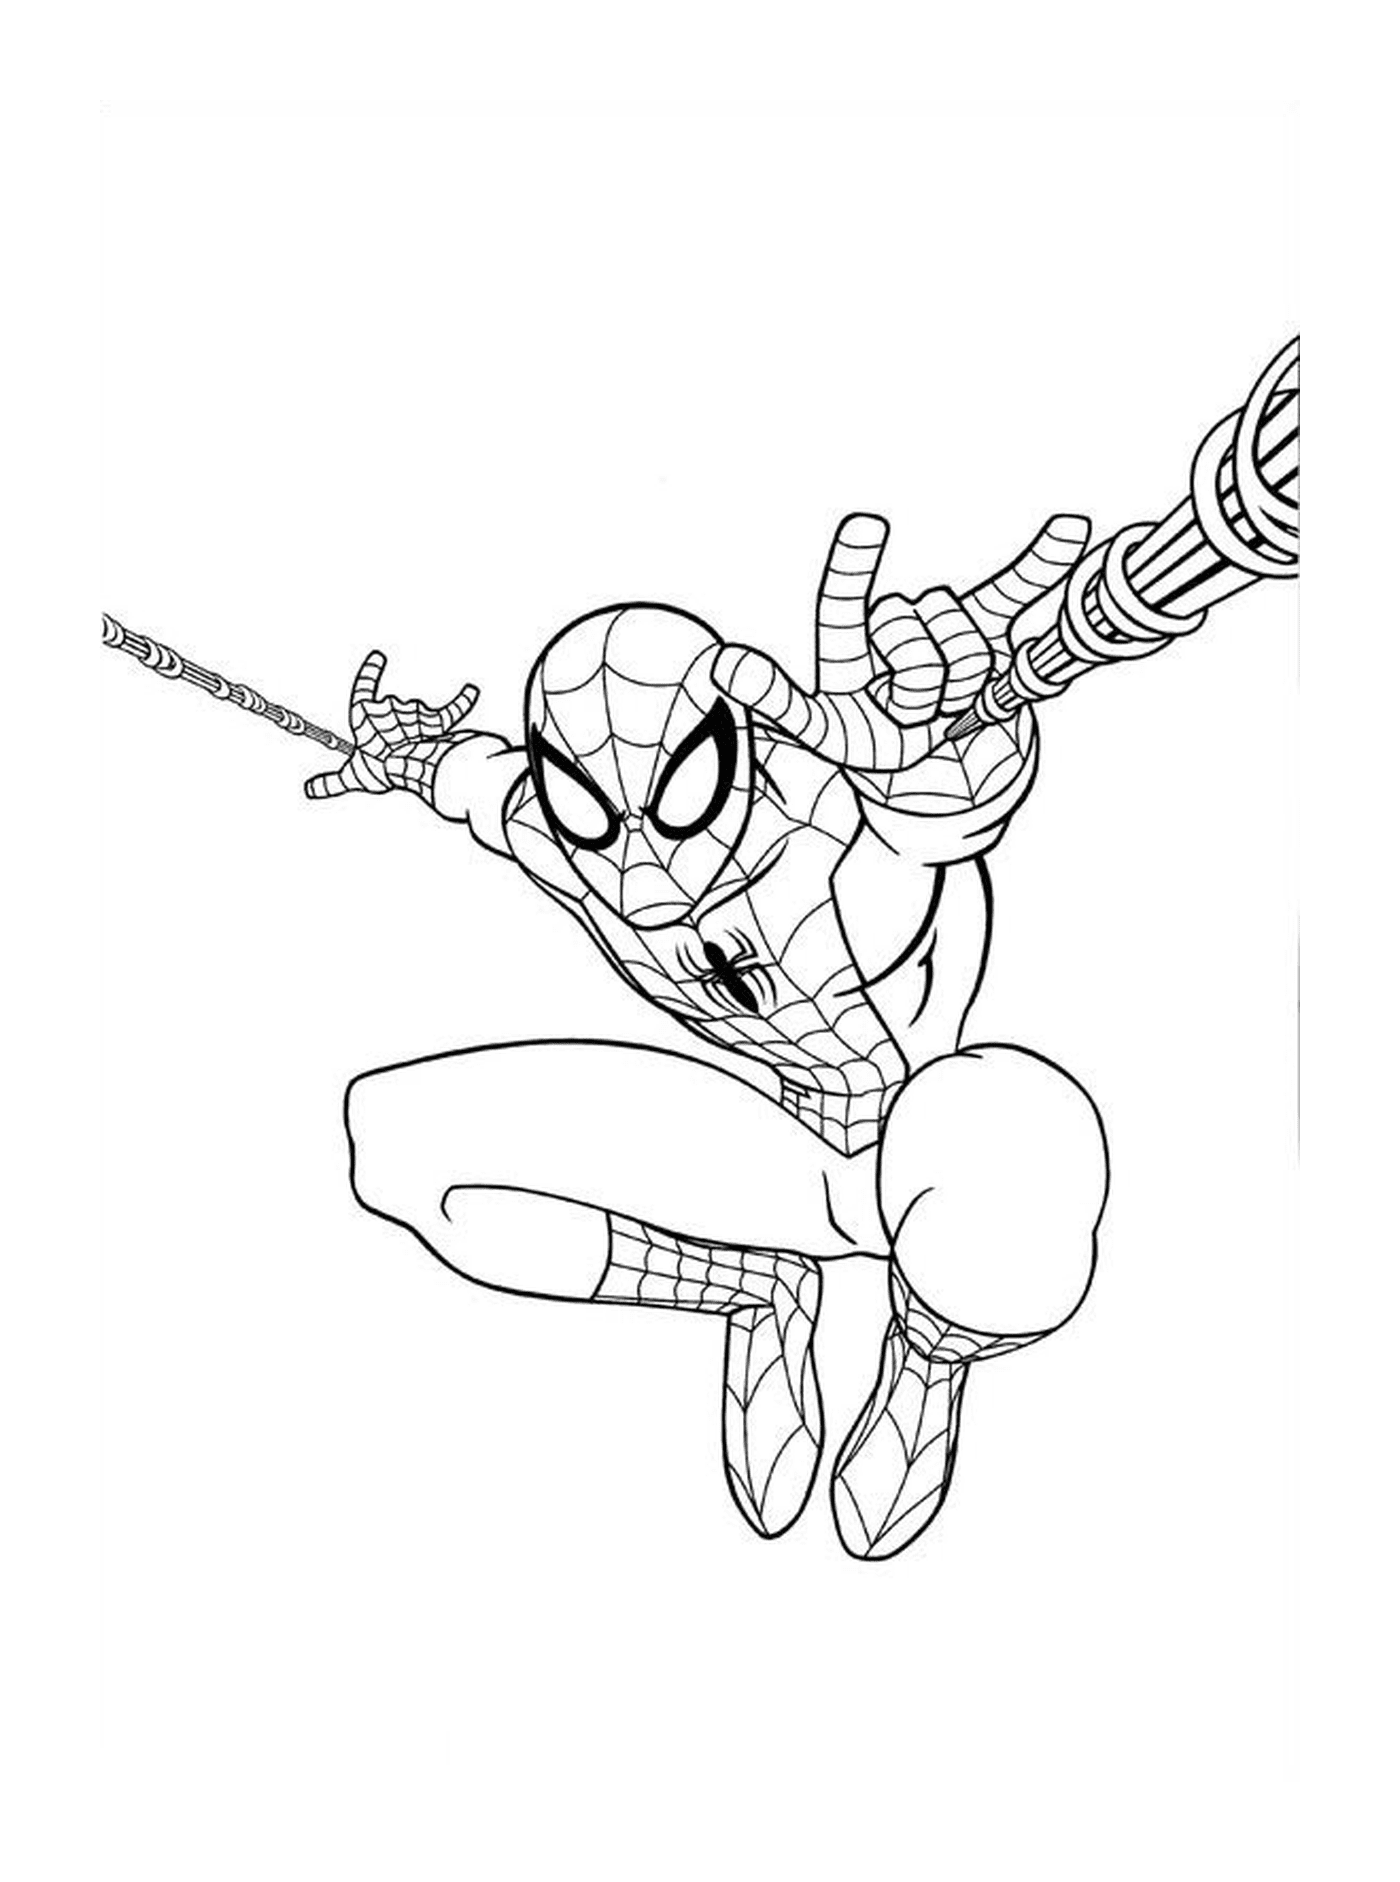   Spiderman sautant 